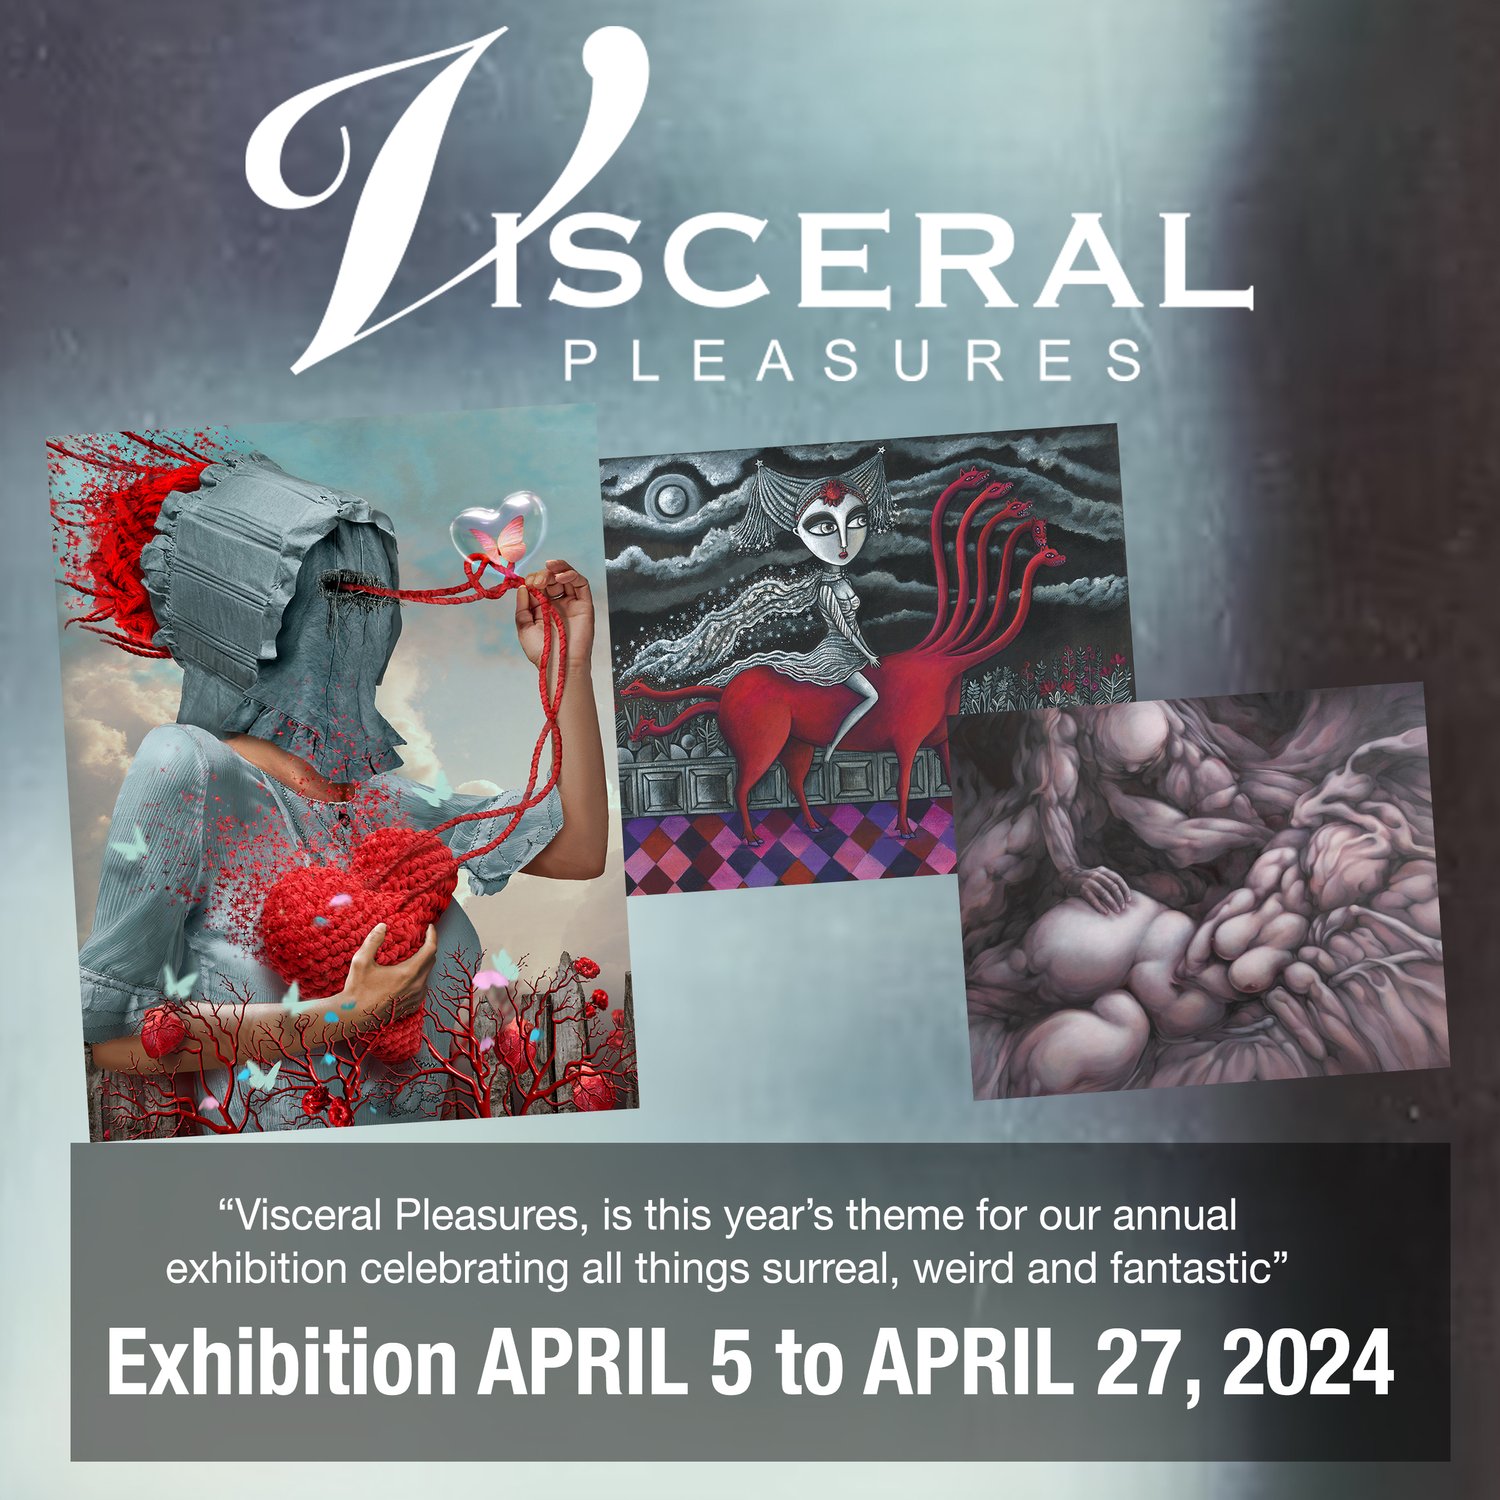 Visceral Pleasures exhibition at MetaGallery flyer